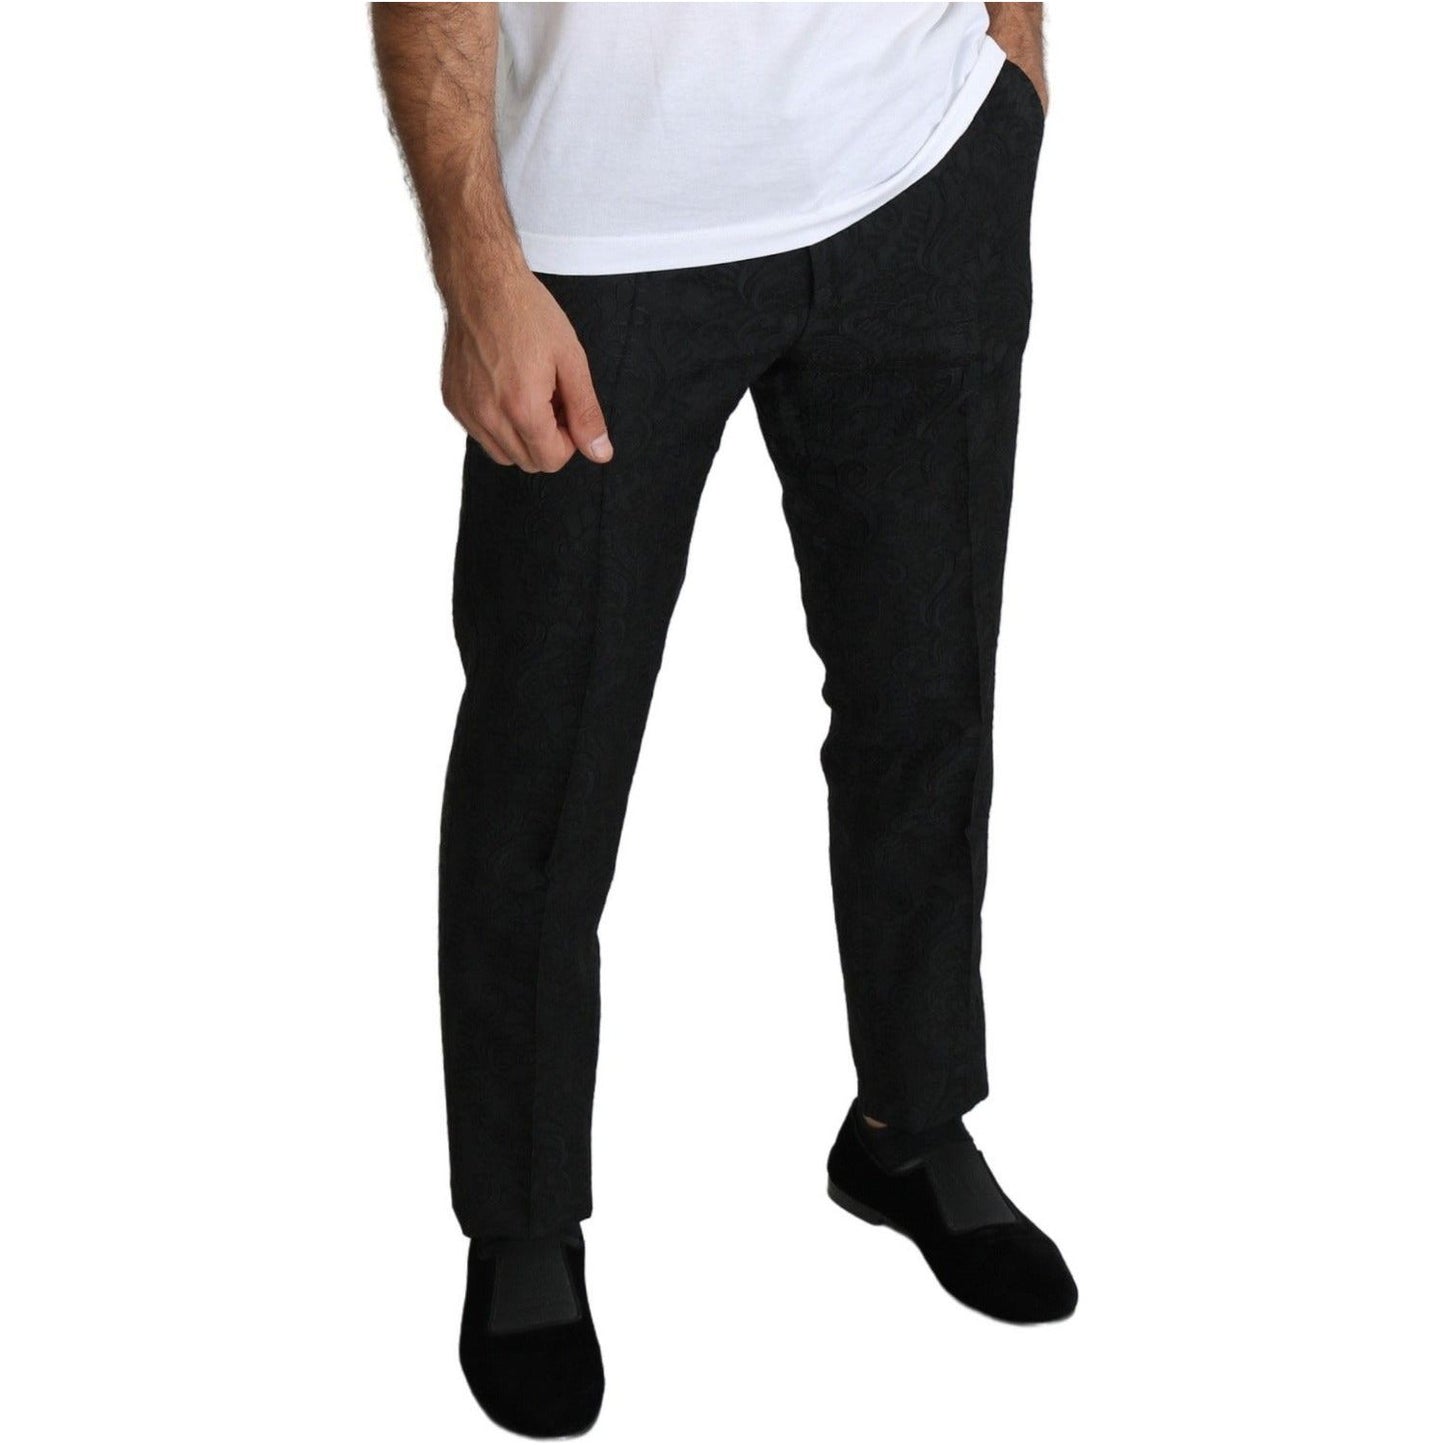 Dolce & Gabbana Elegant Floral Brocade Dress Trousers Jeans & Pants black-floral-brocade-slim-trouser-pants